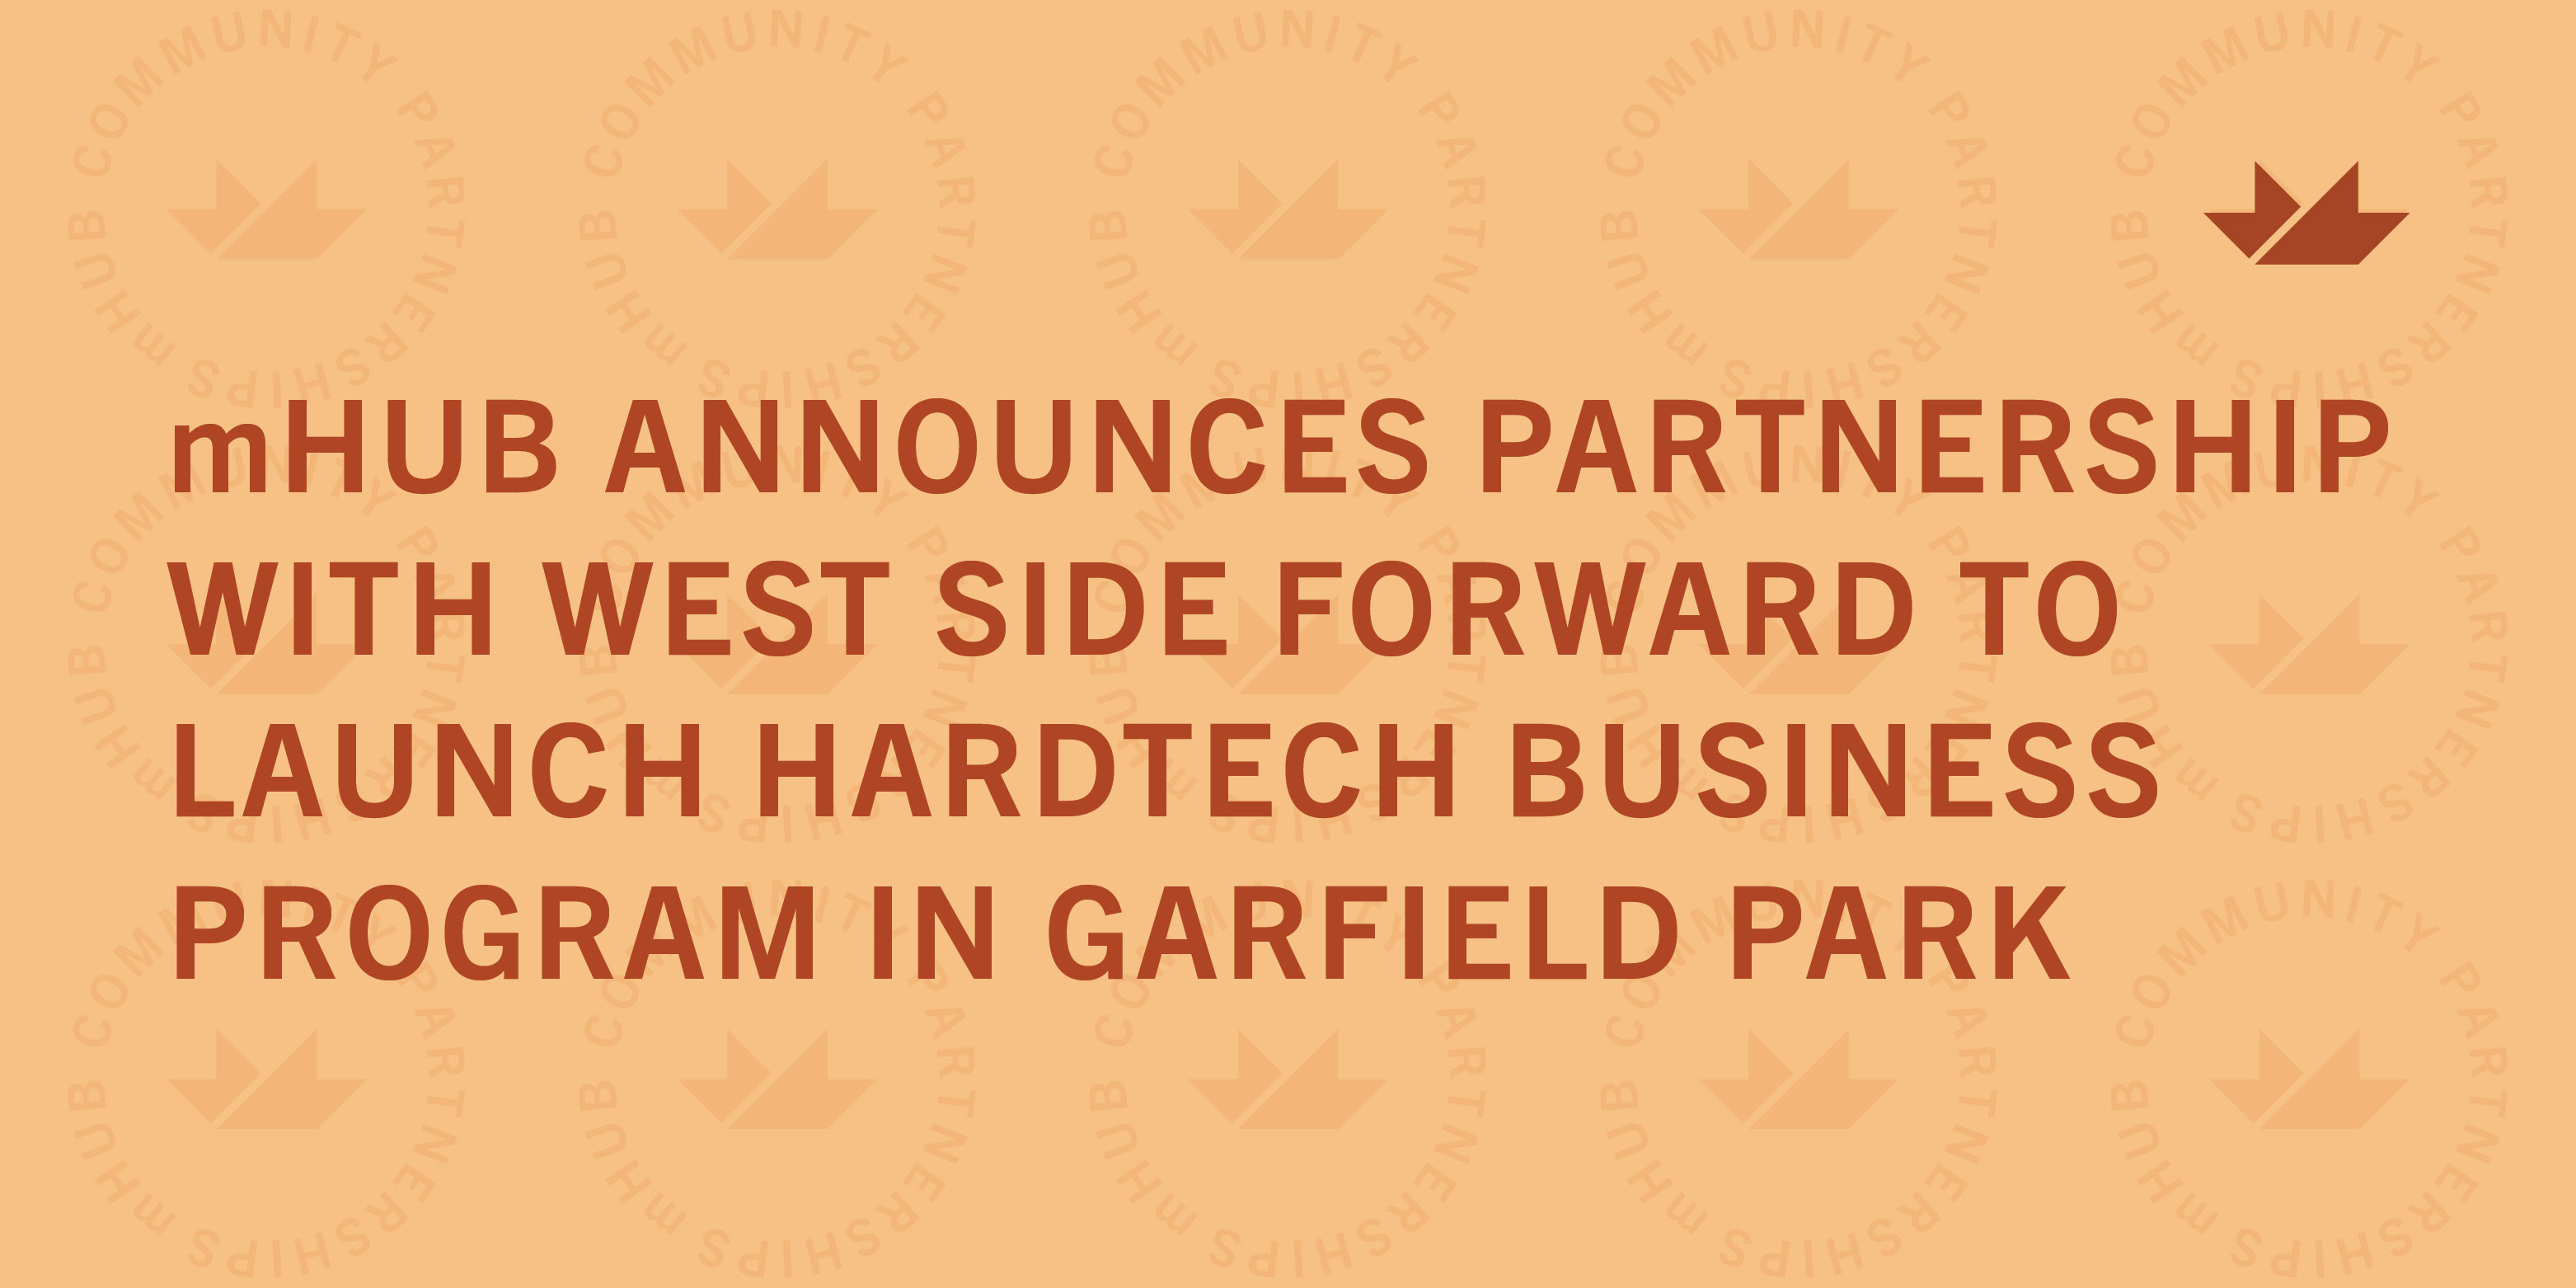 mHUB Innovation Center Announces Partnership with West Side Forward